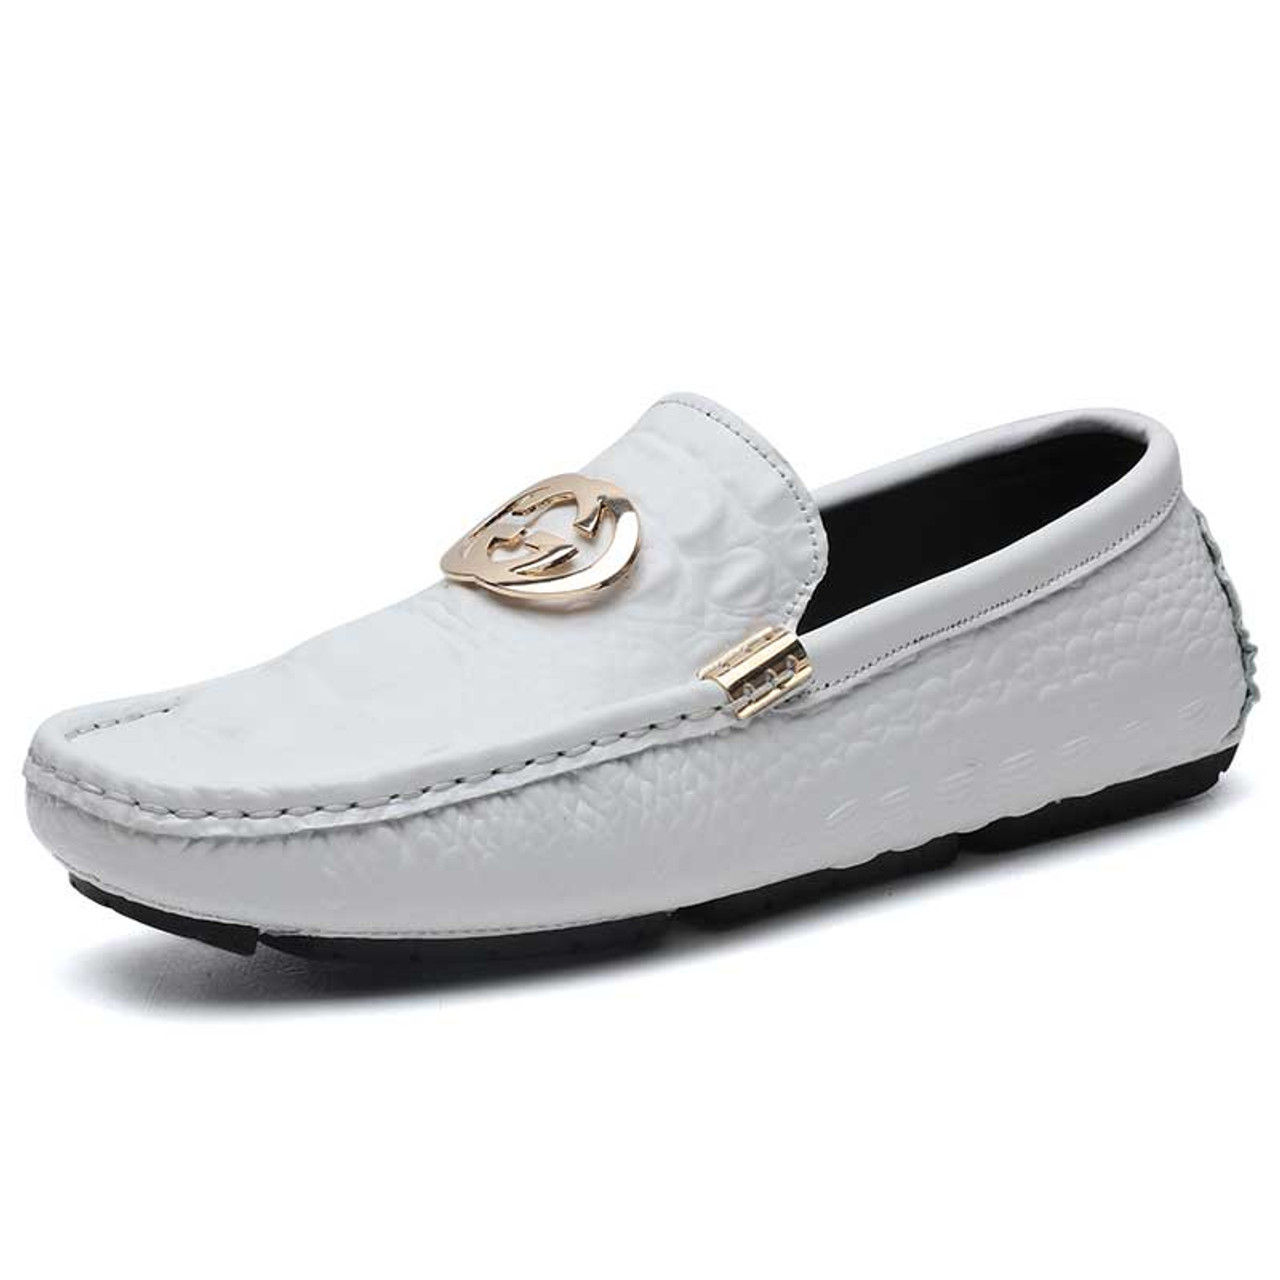 White metal buckle croc skin pattern slip on shoe loafer | Mens shoe ...